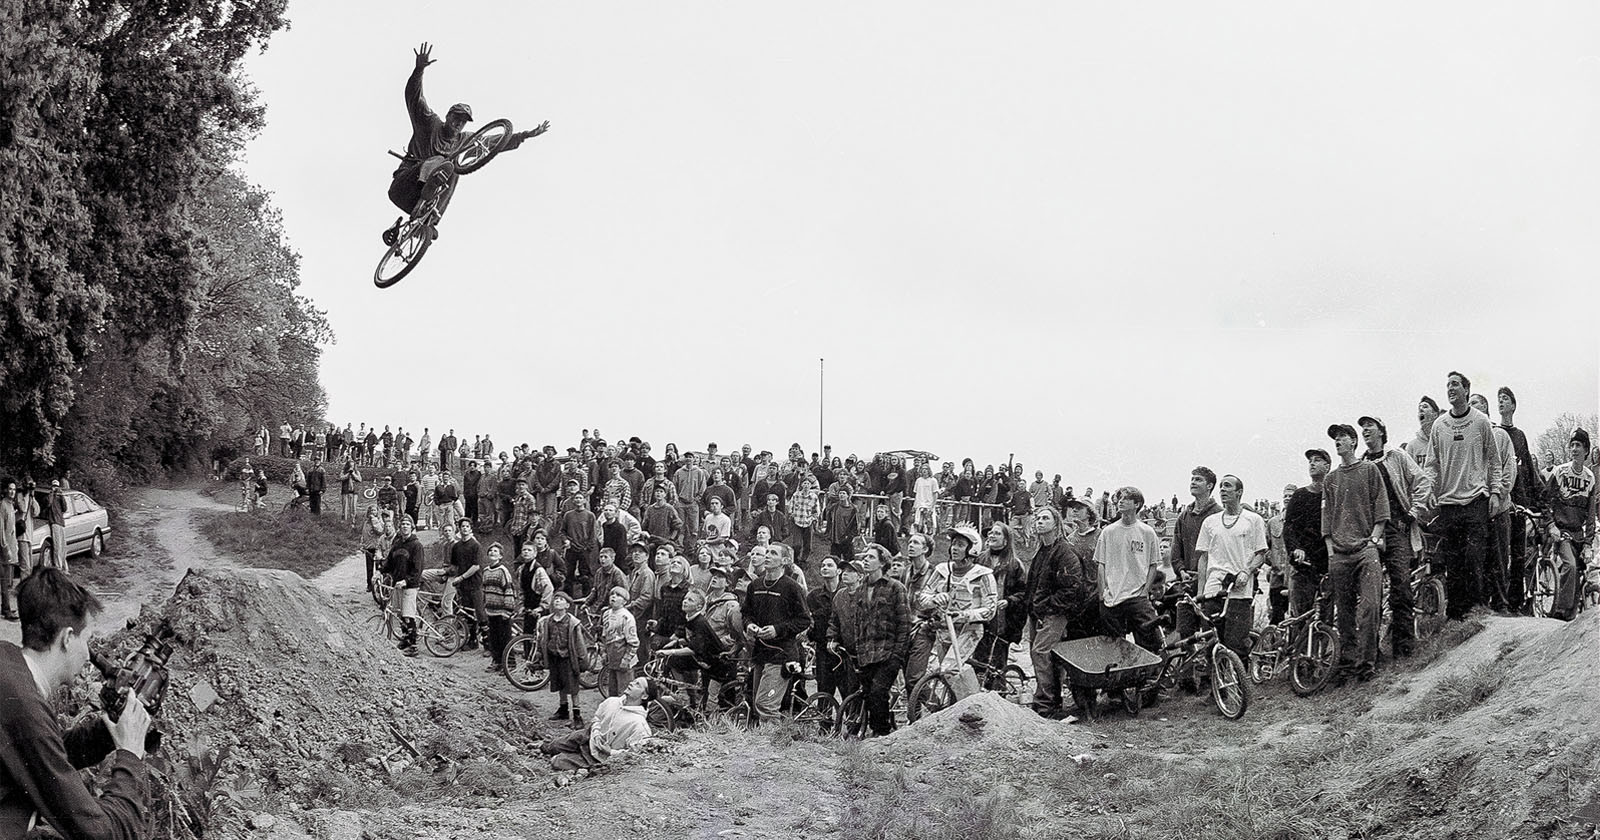 Film Photos Capture the Golden Era of BMX